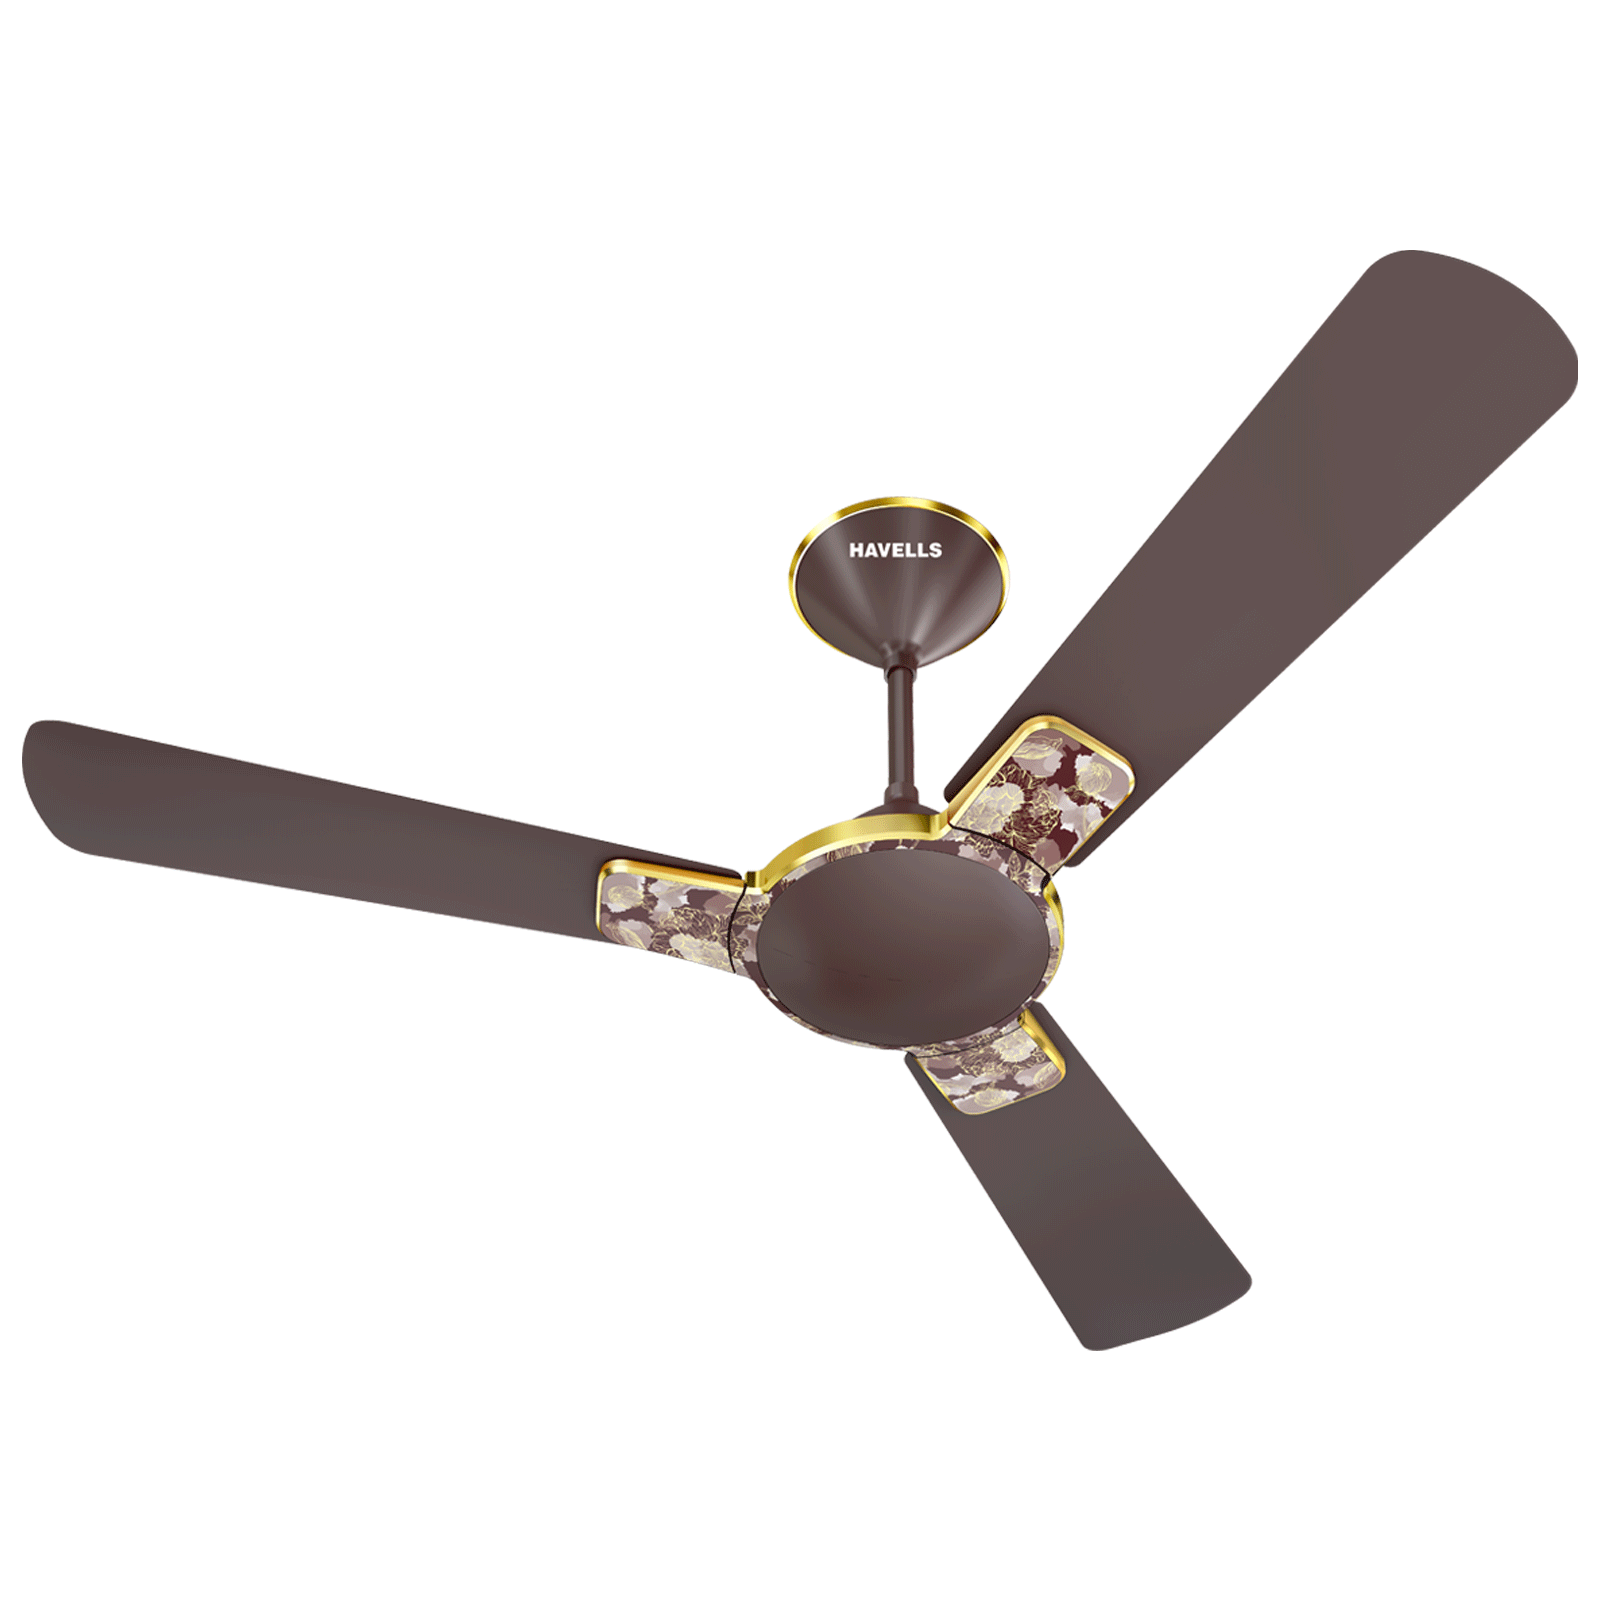 Havells Enticer Art - NS Flora 120cm Sweep 3 Blade Ceiling Fan (390 RPM Spin Speed, FHCEASTFEB48, Espresso Brown)